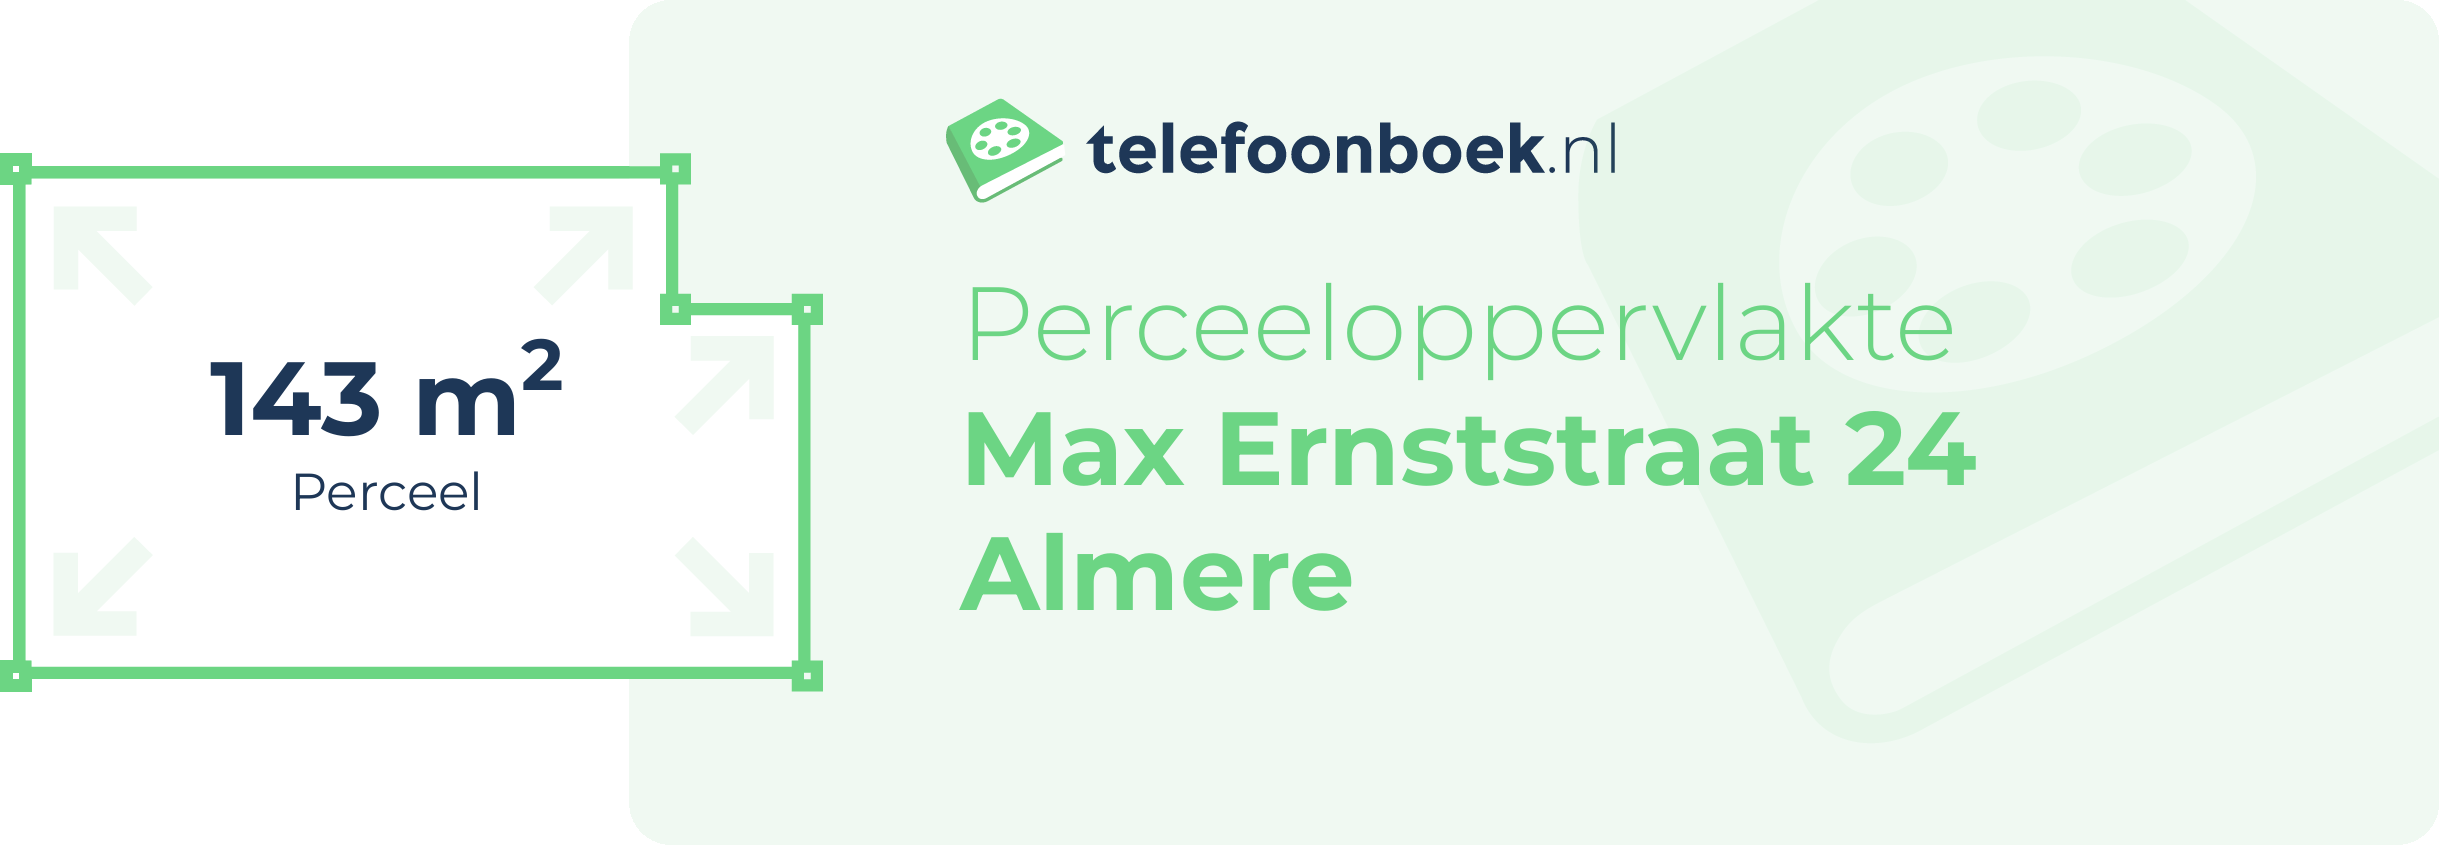 Perceeloppervlakte Max Ernststraat 24 Almere